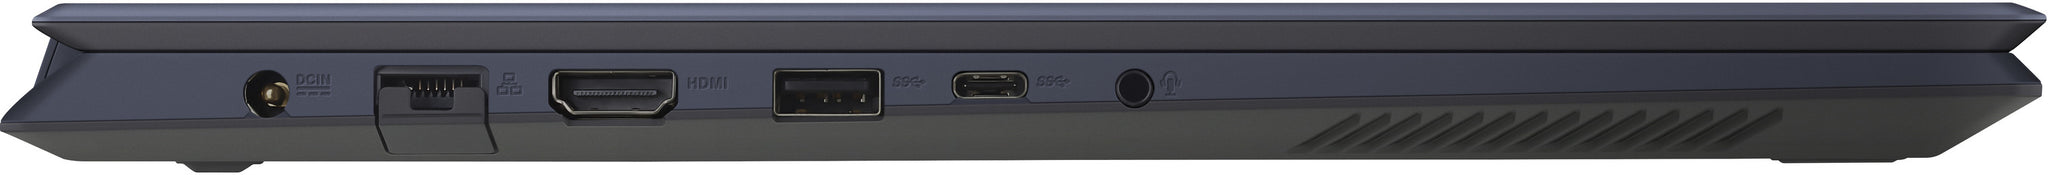 ASUS VivoBook Light Gamer F571LH, 15.6